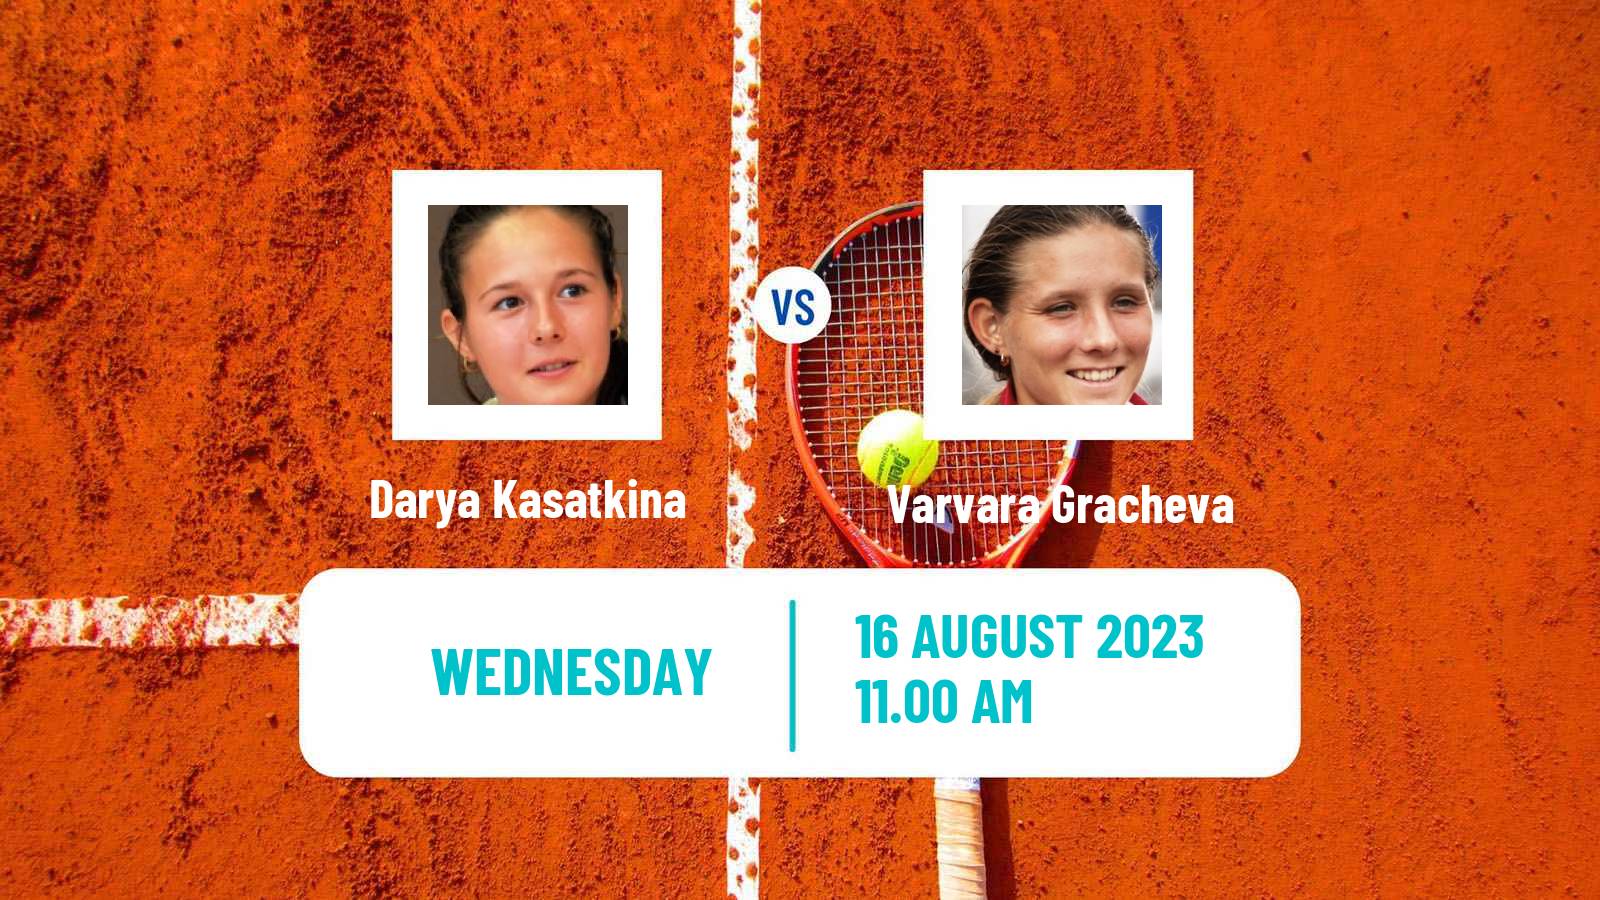 Tennis WTA Cincinnati Darya Kasatkina - Varvara Gracheva